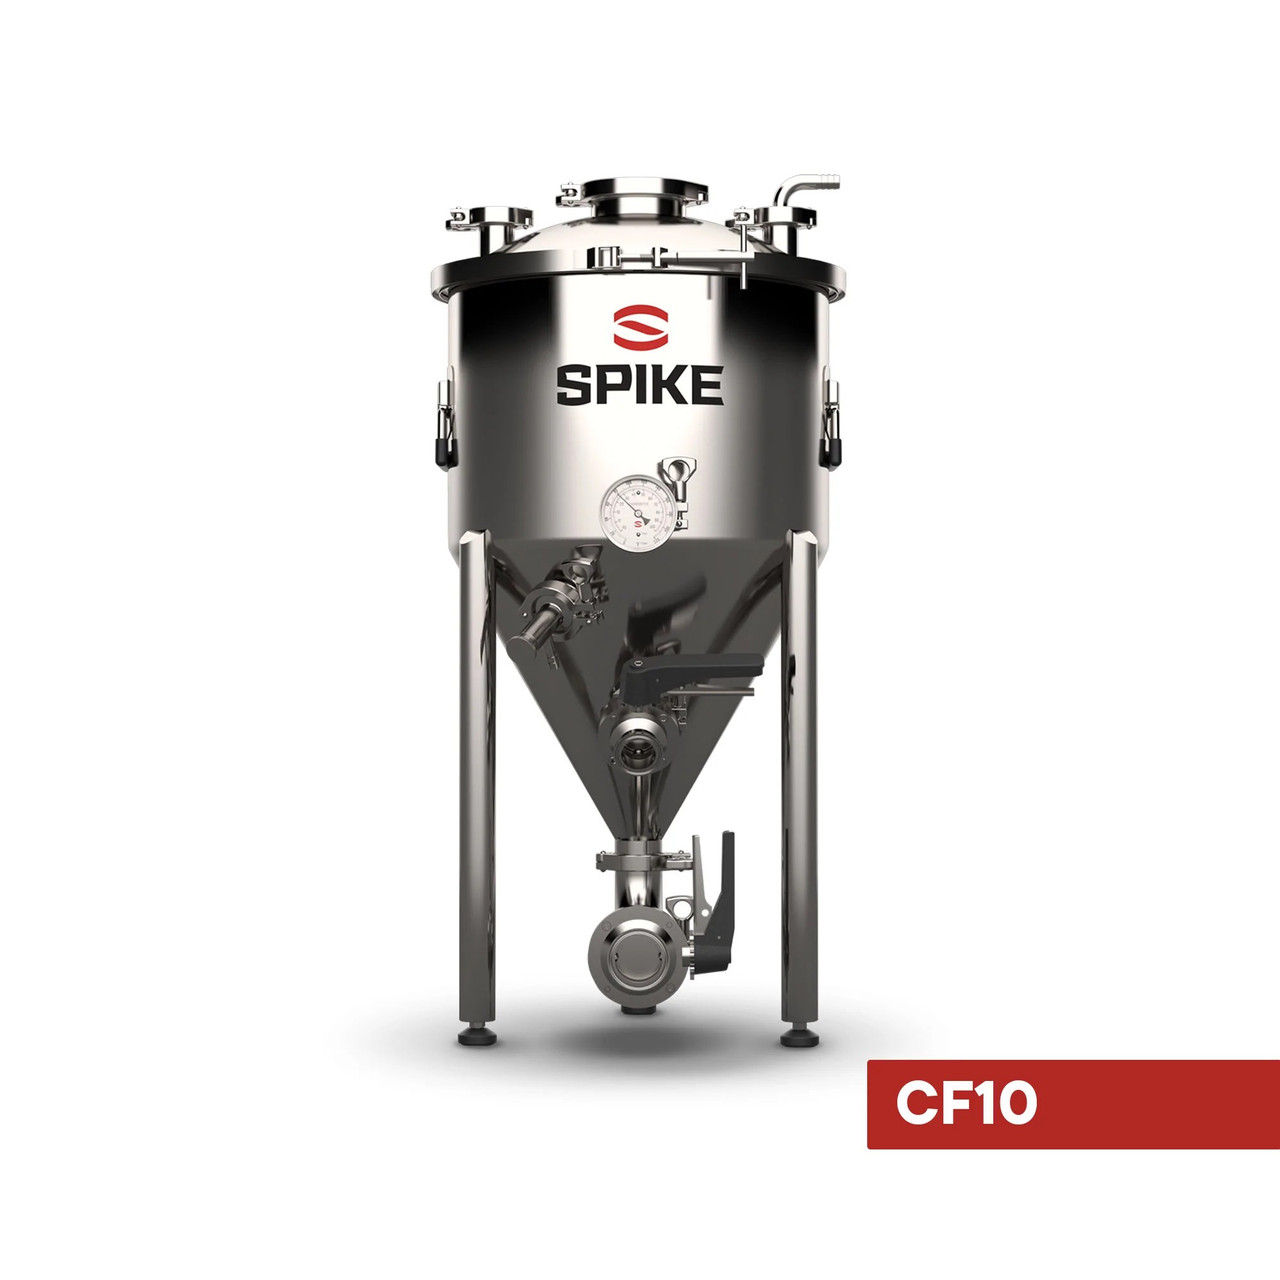 Spike CF10 Conical Unitank - 14 Gallon